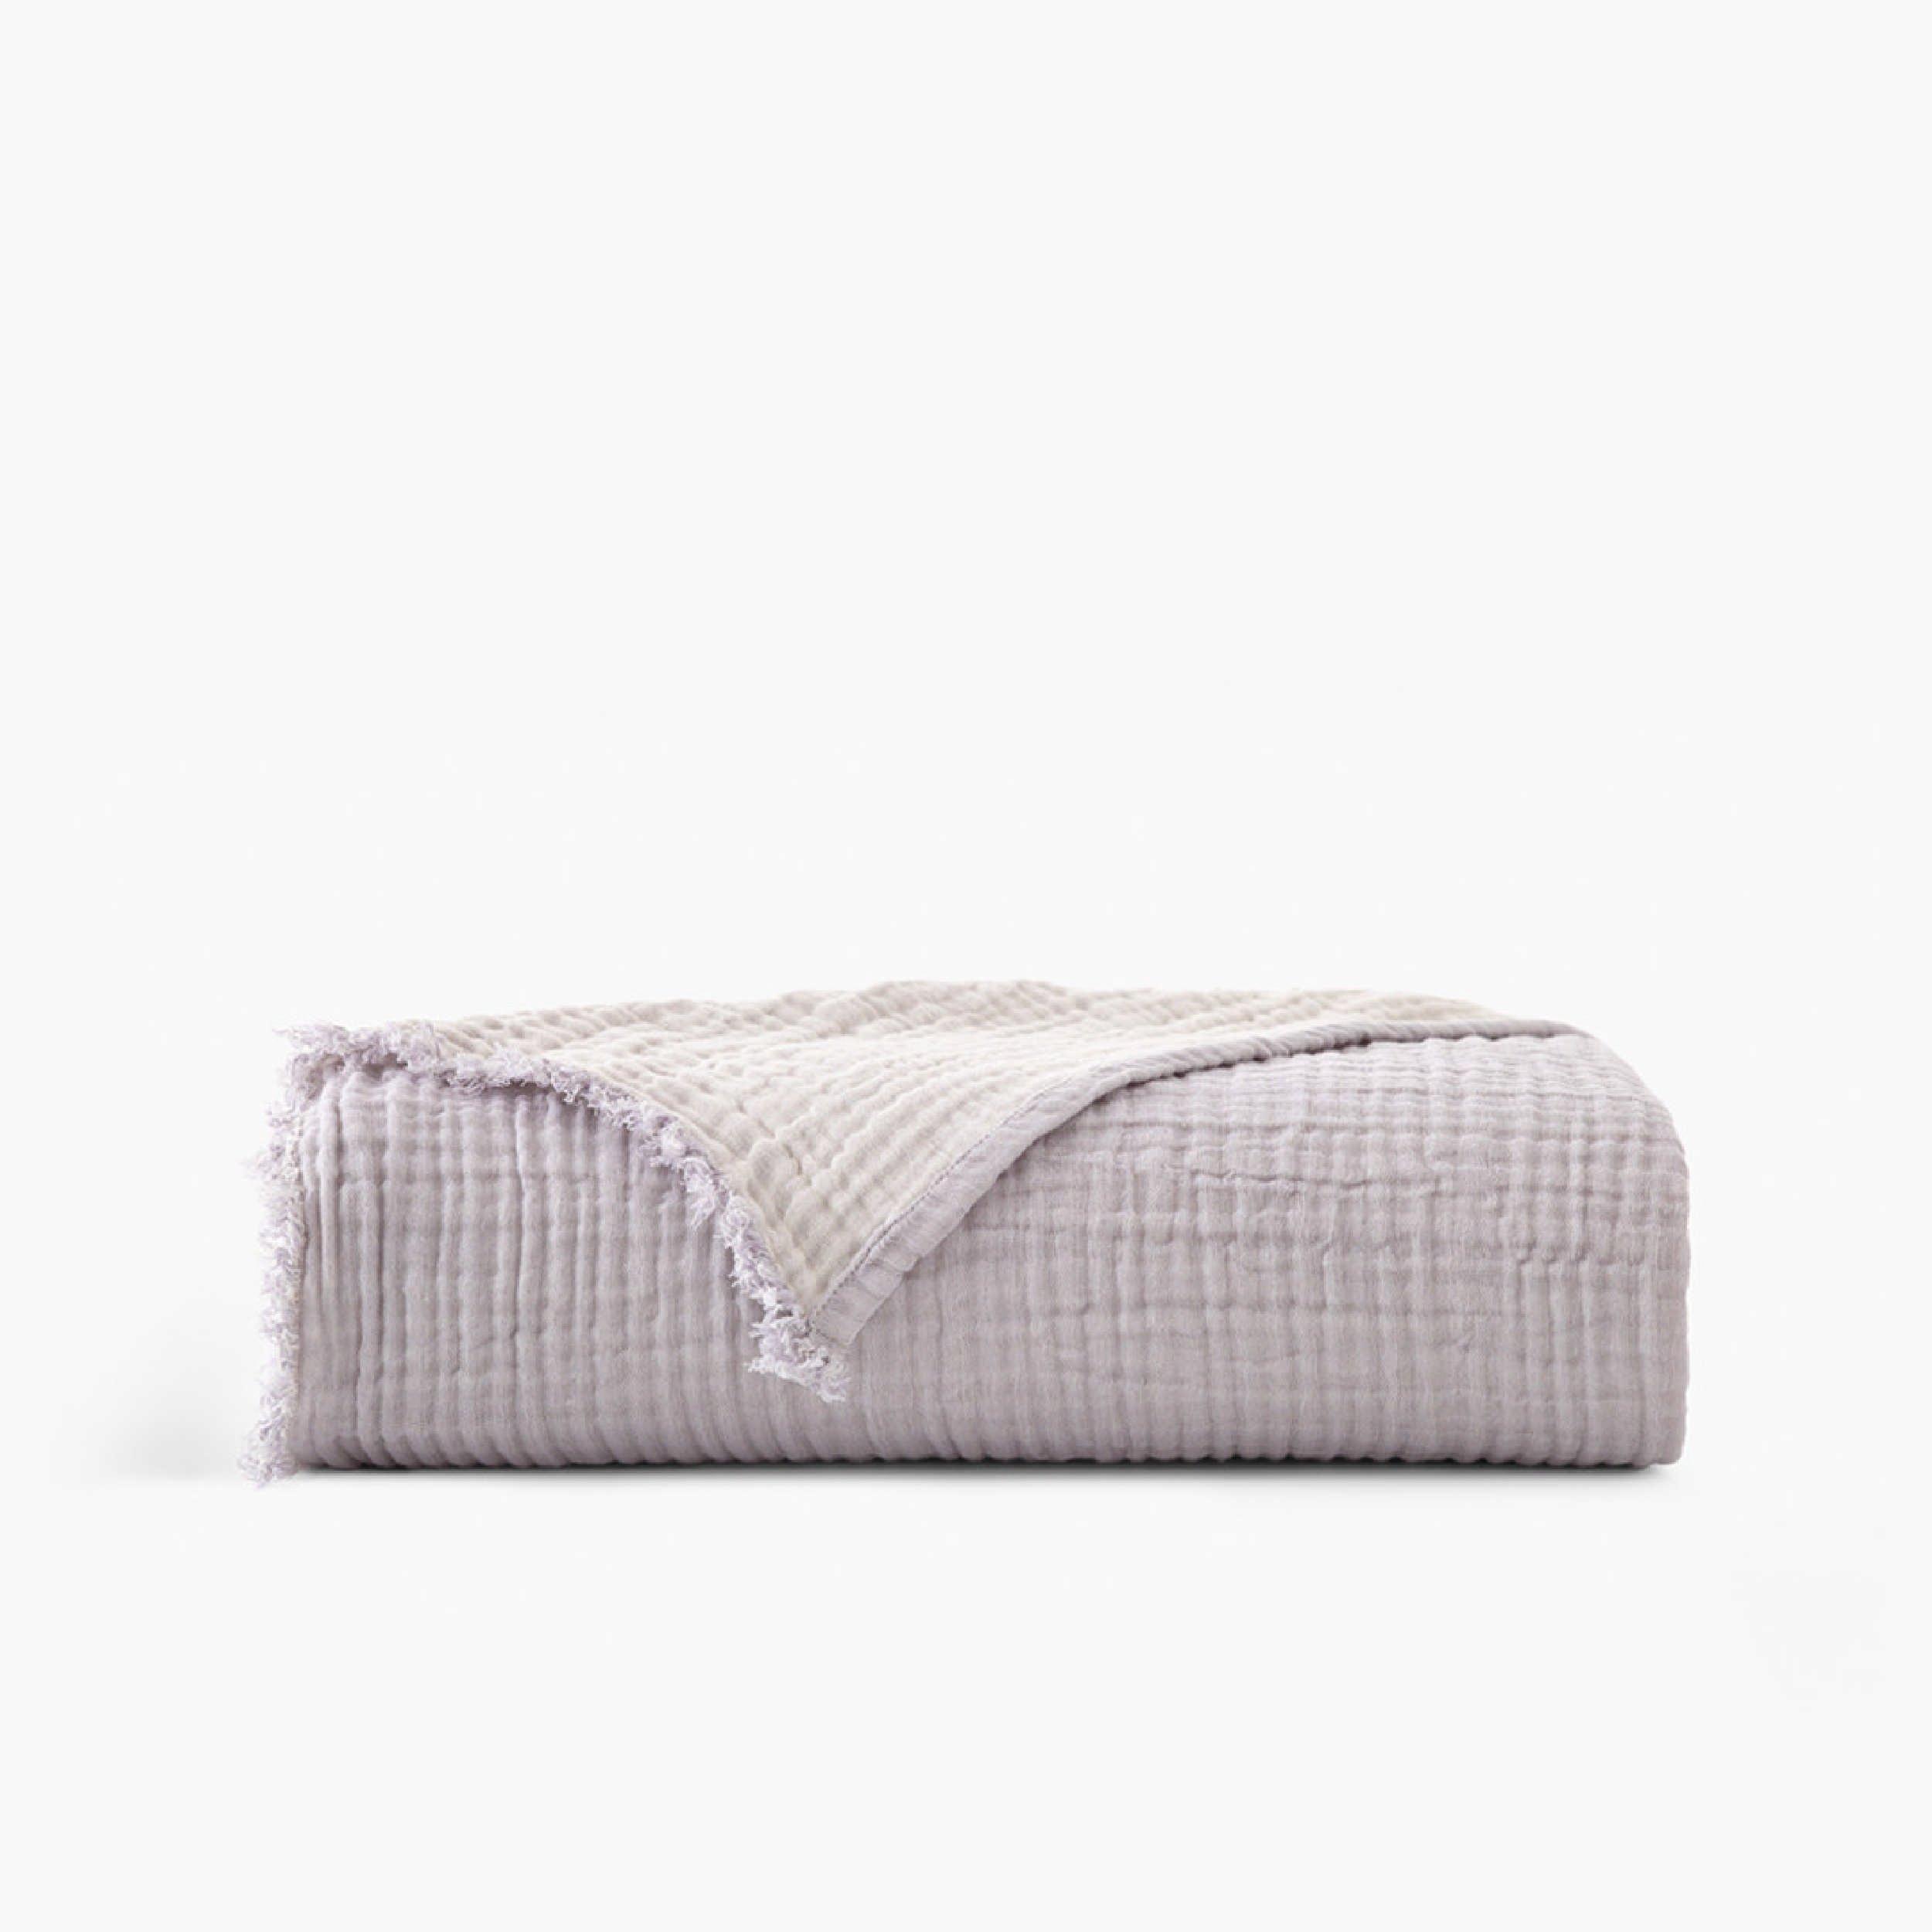 Two-Toned Organic Throw Blanket.